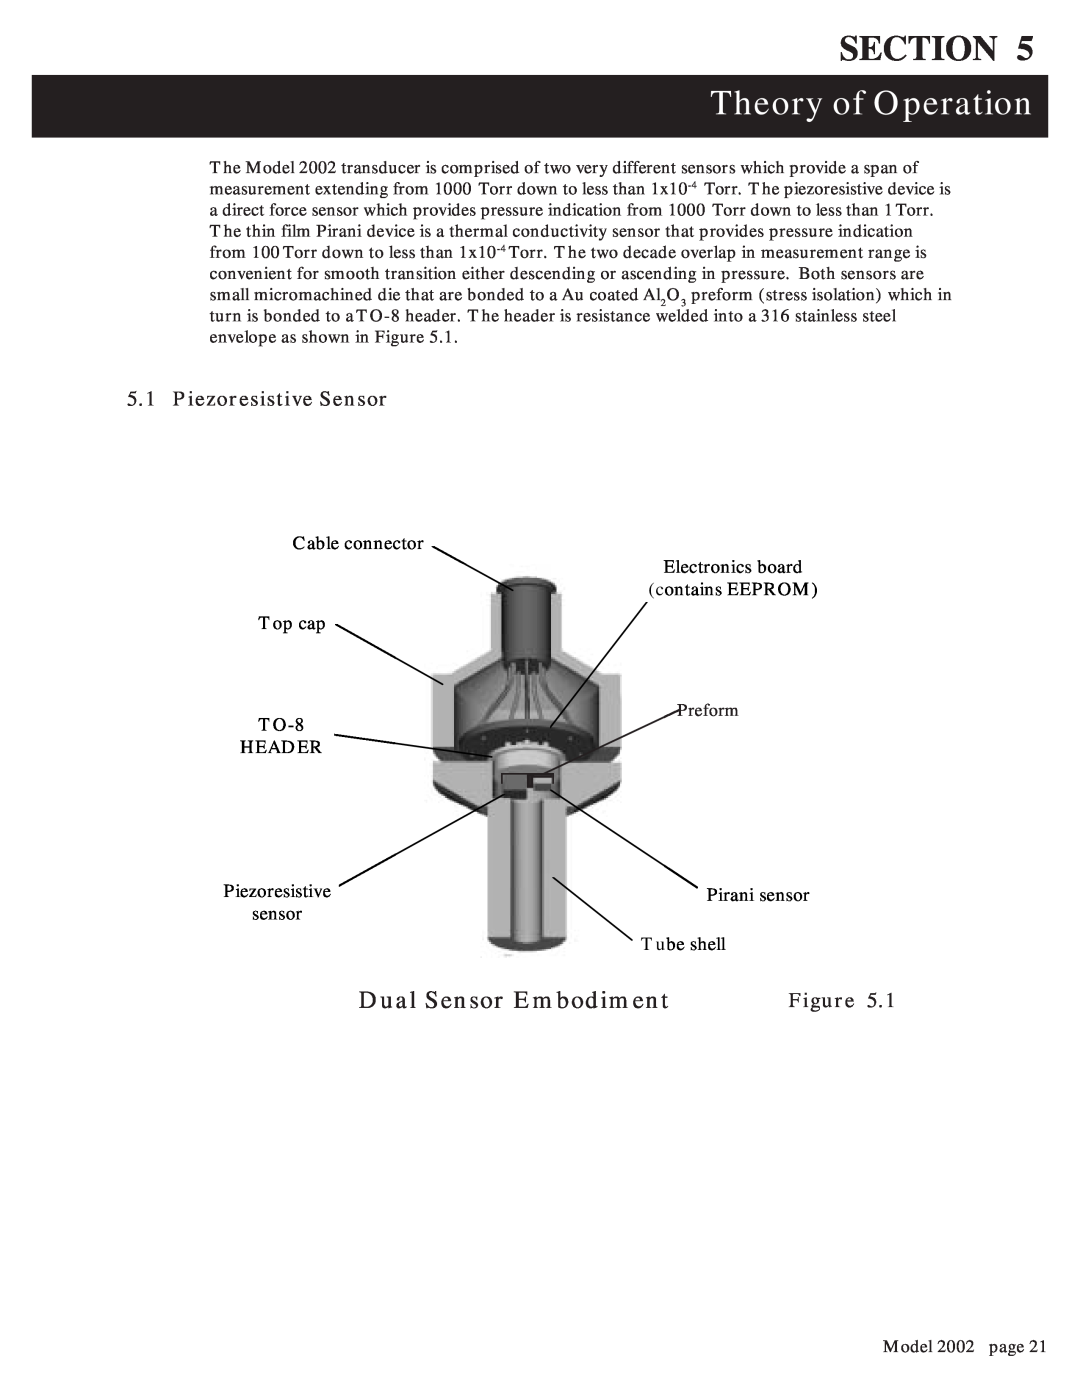 Teledyne 2002 instruction manual Theory of Operation, Dual Sensor Embodiment, Piezoresistive Sensor, Section 